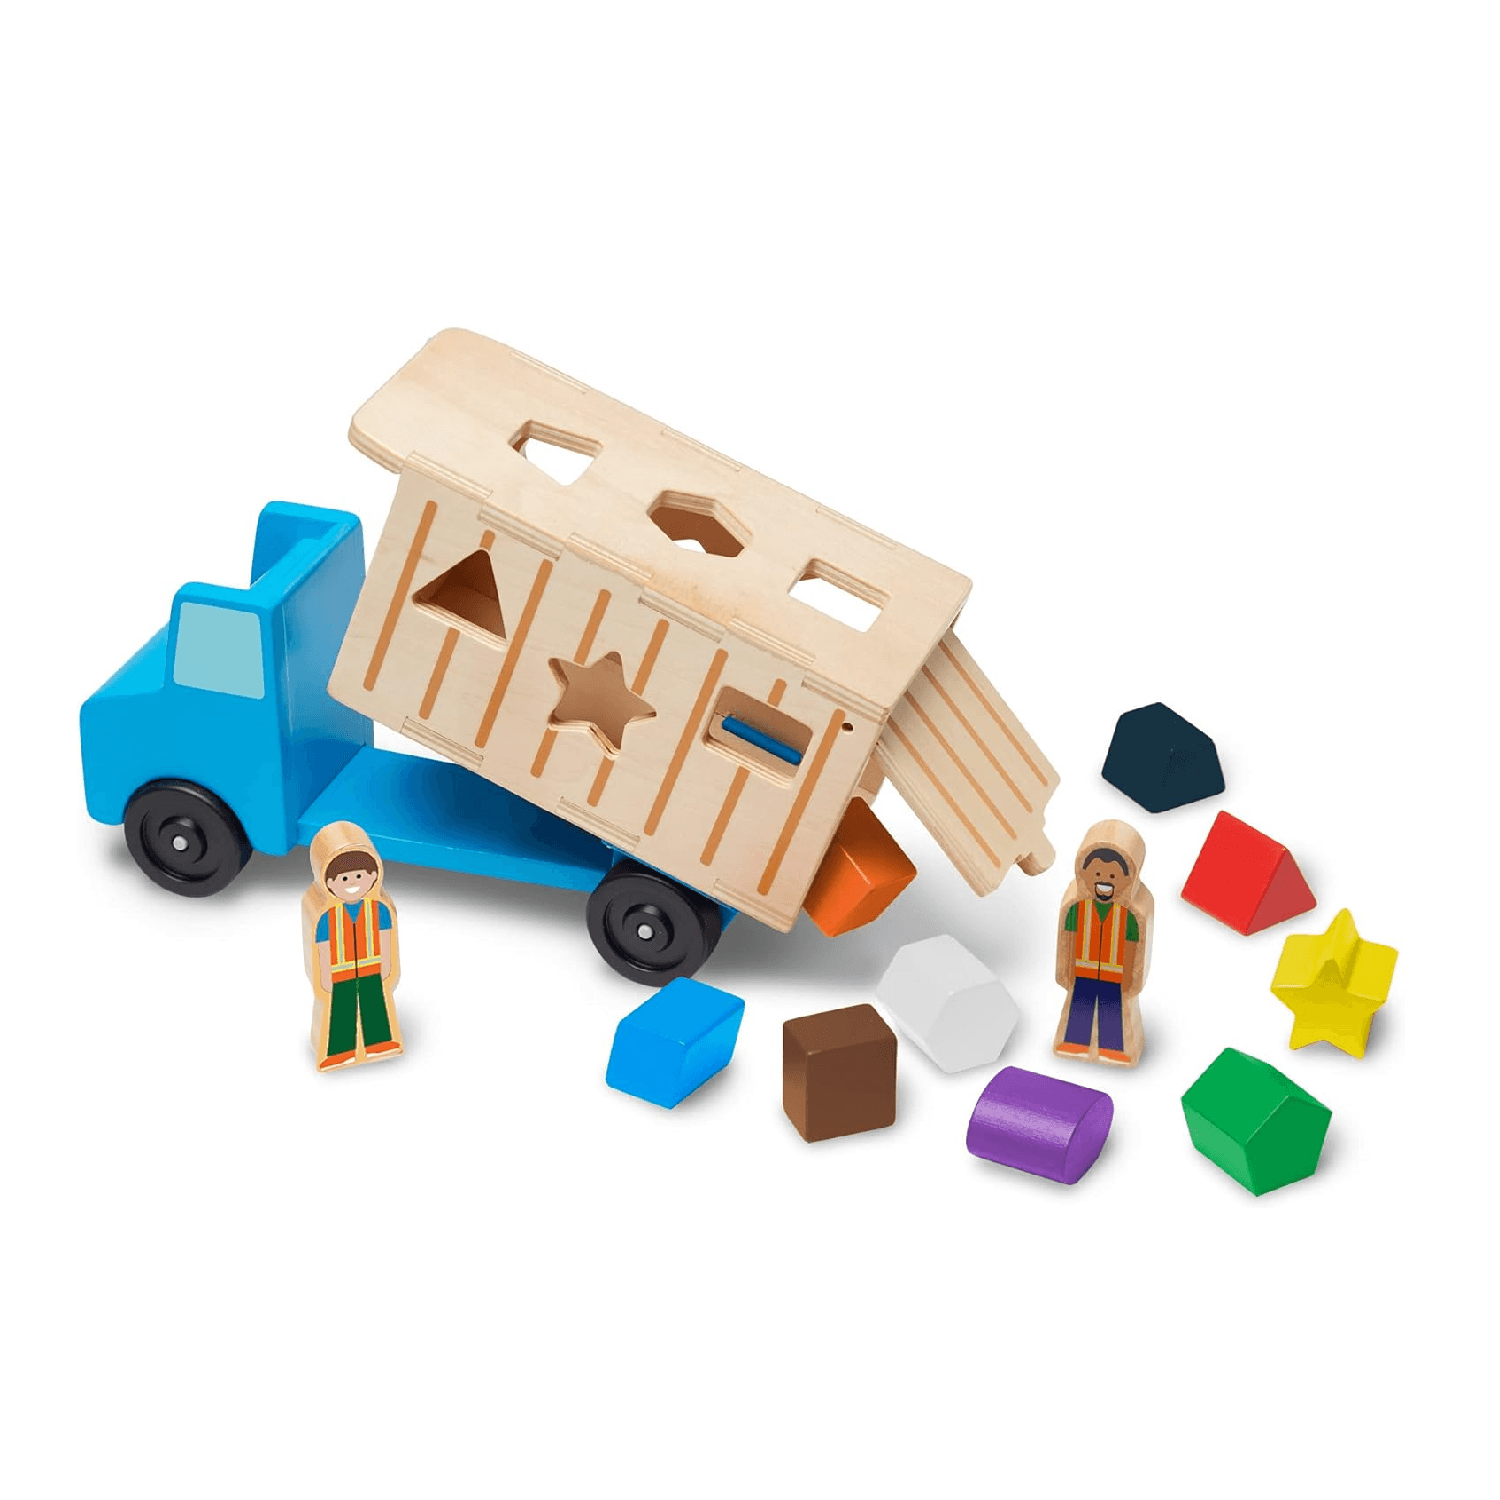 Montessori shape sort dump truck